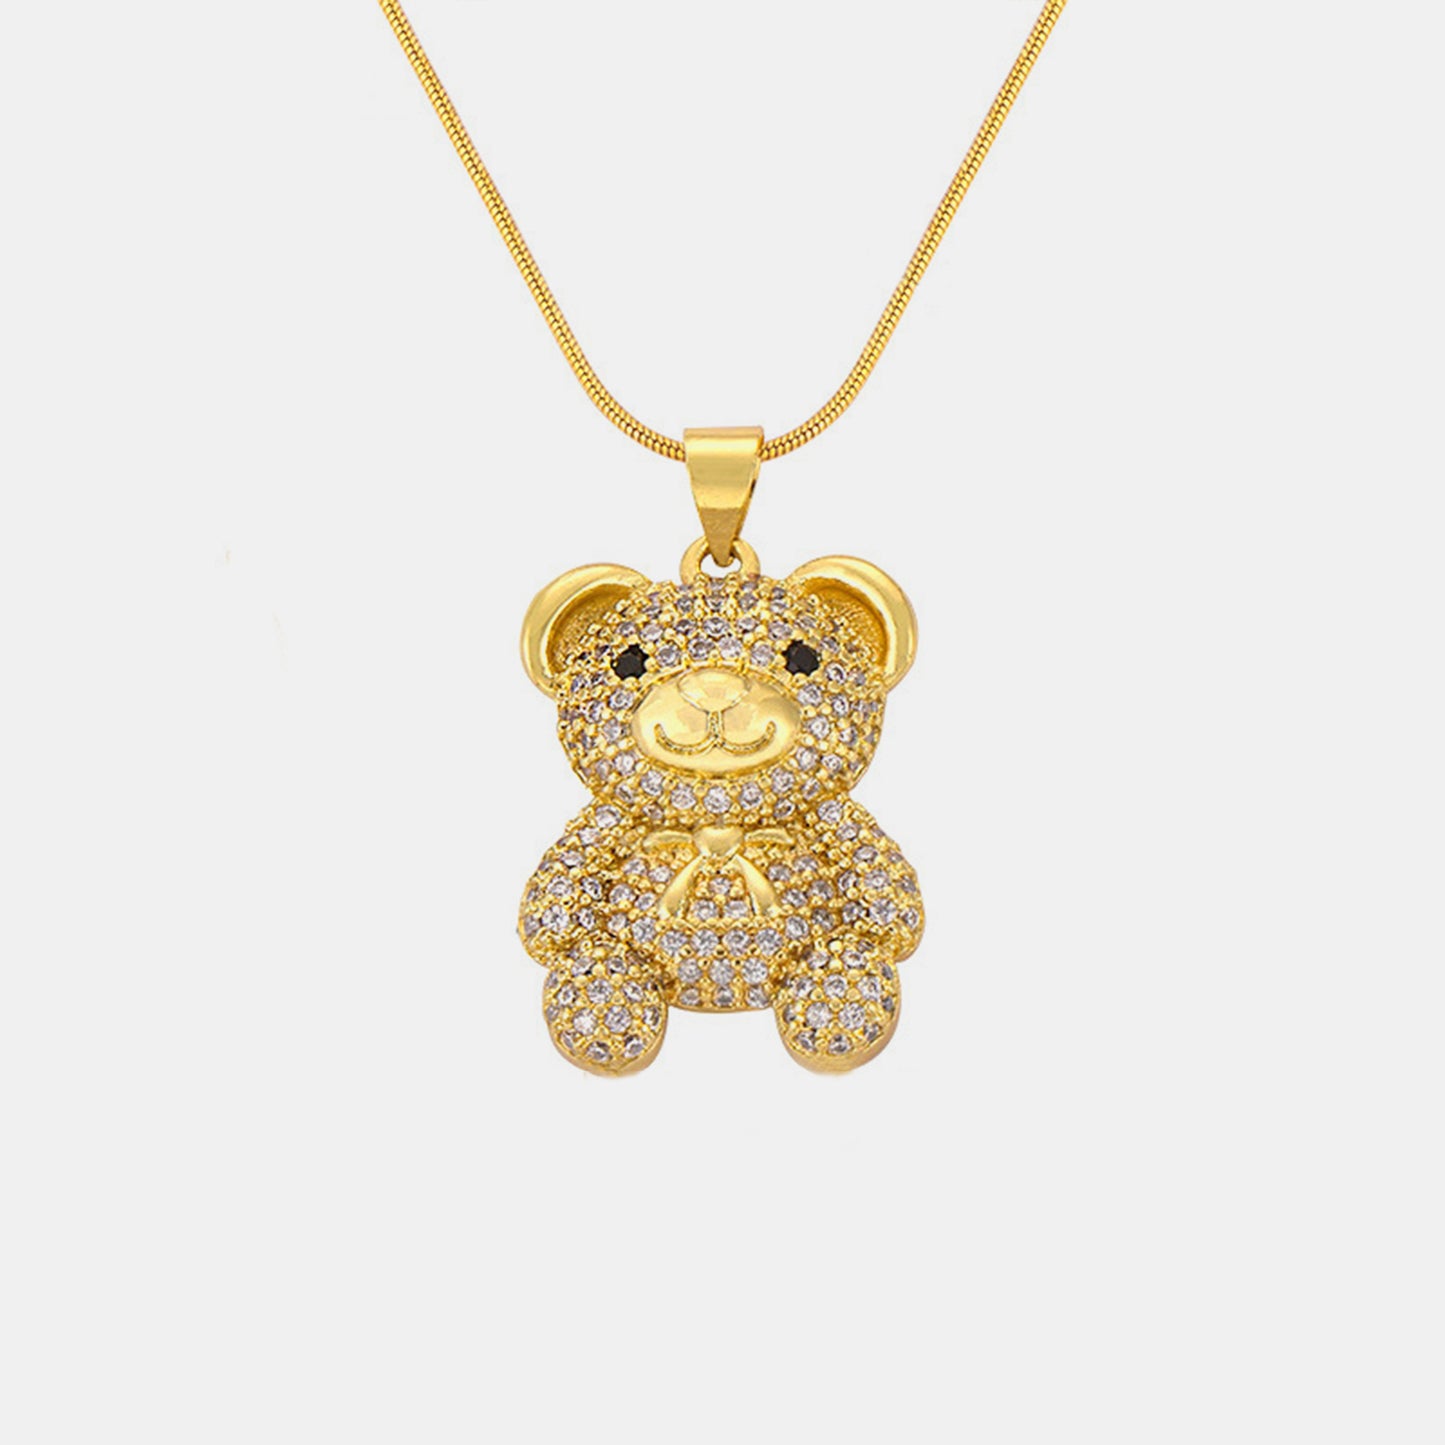 TEEK - Titanium Steel Gold-Plated Bear Pendant Necklace JEWELRY TEEK Trend Style B  